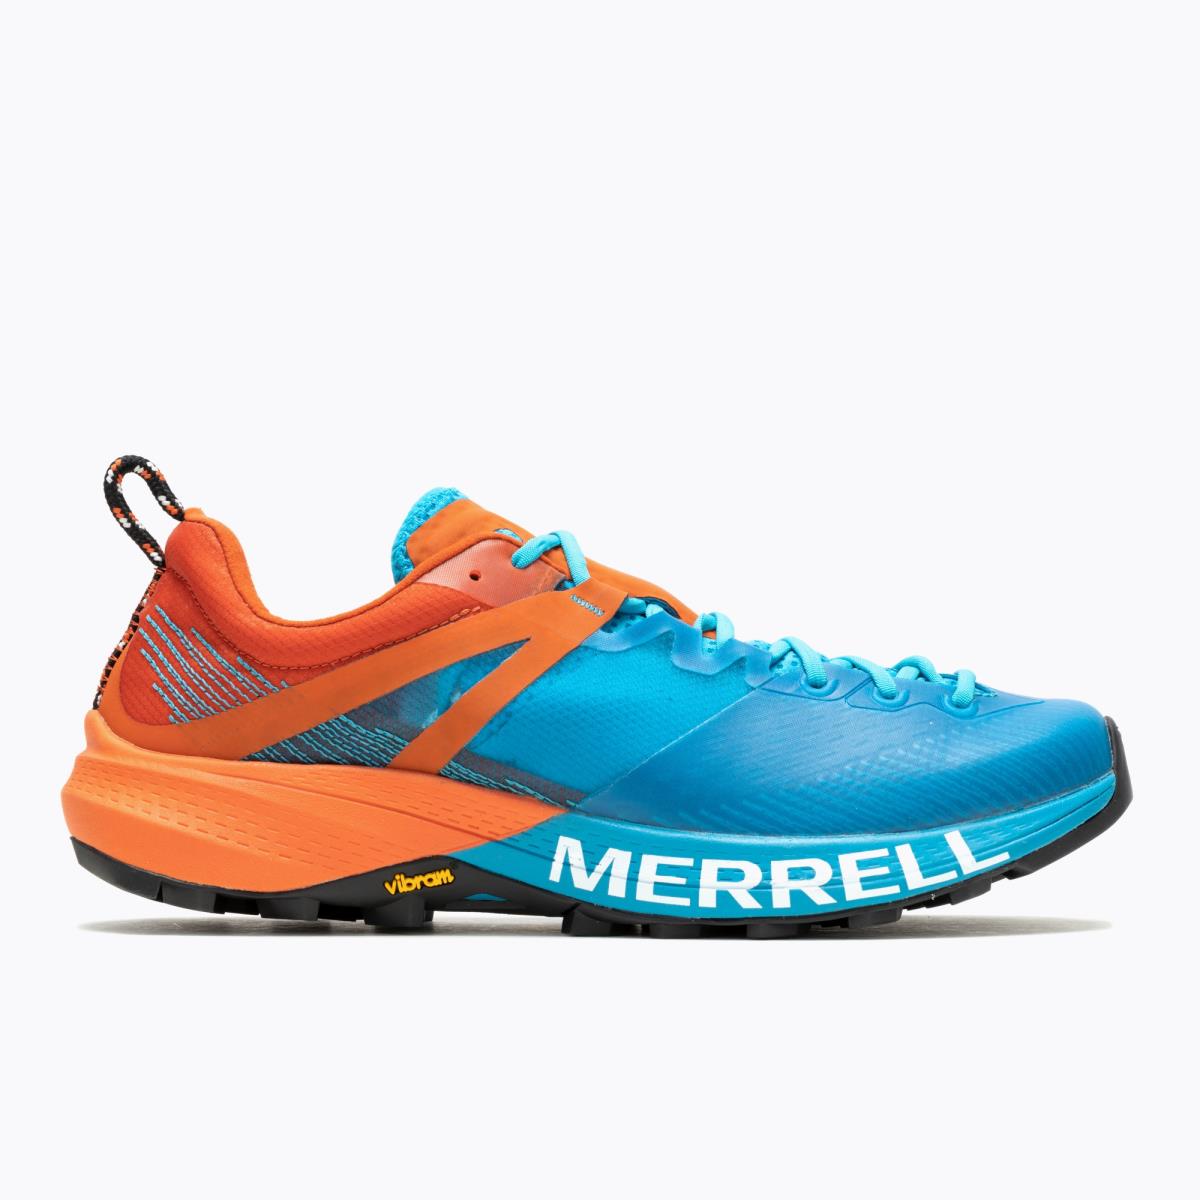 Merrell Men Mtl Mqm Shoes Tahoe/Tangerine